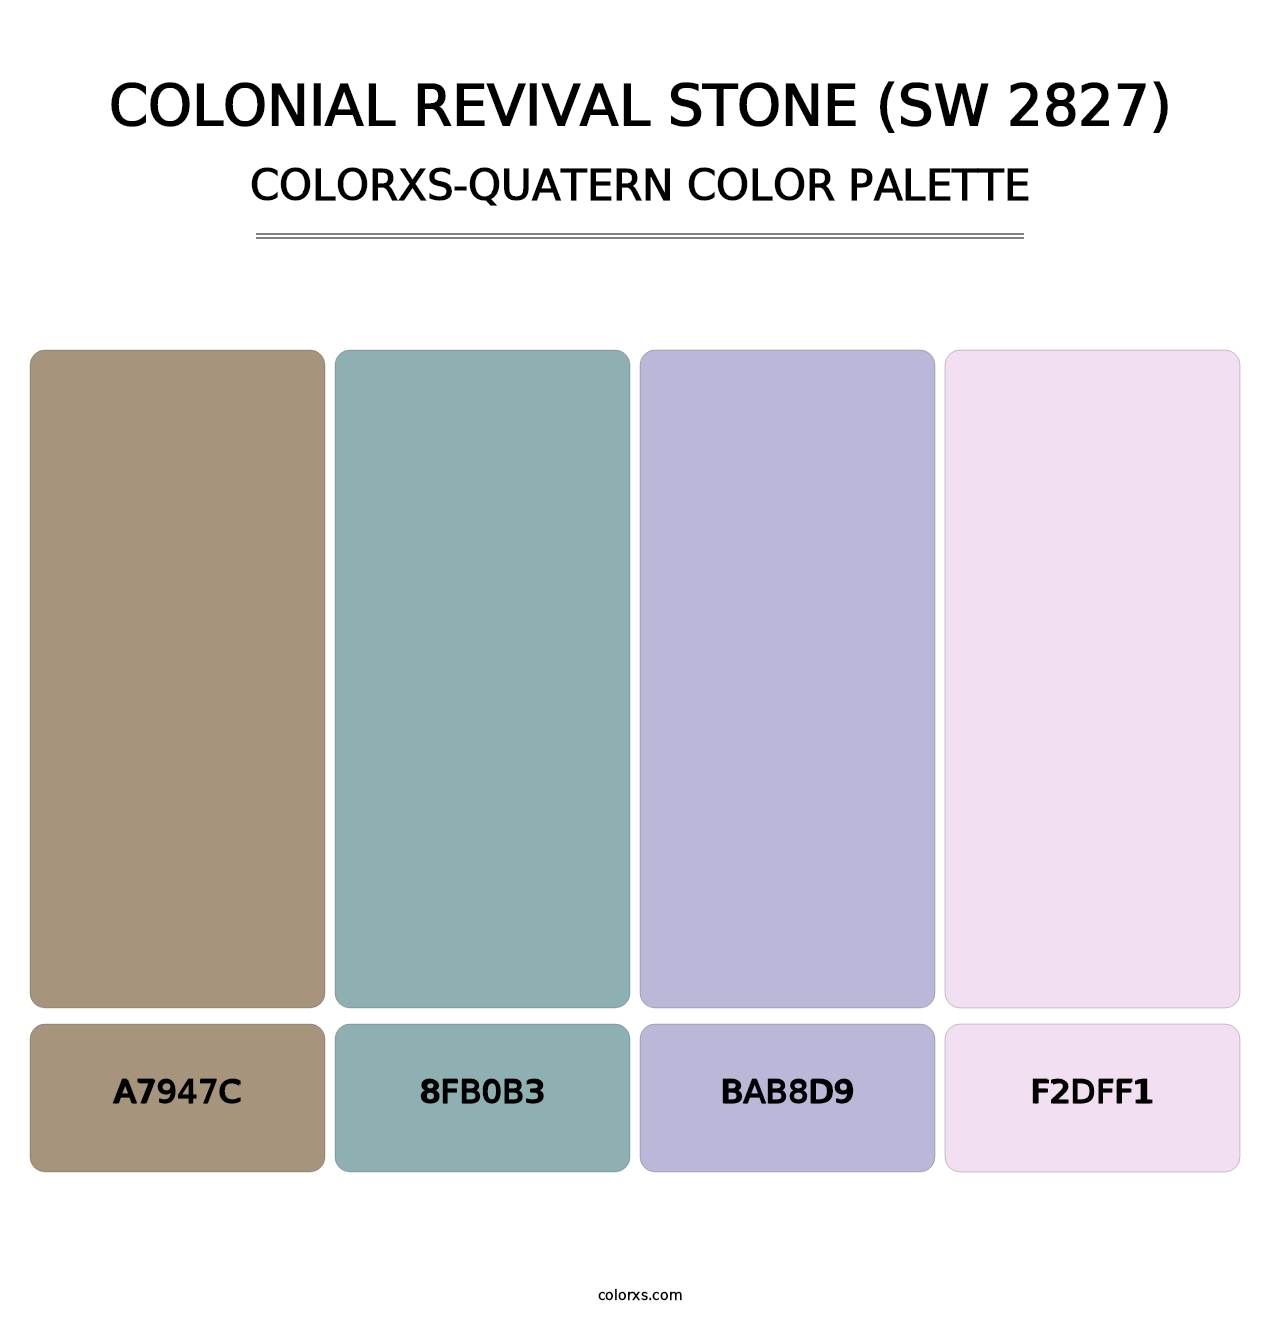 Colonial Revival Stone (SW 2827) - Colorxs Quatern Palette